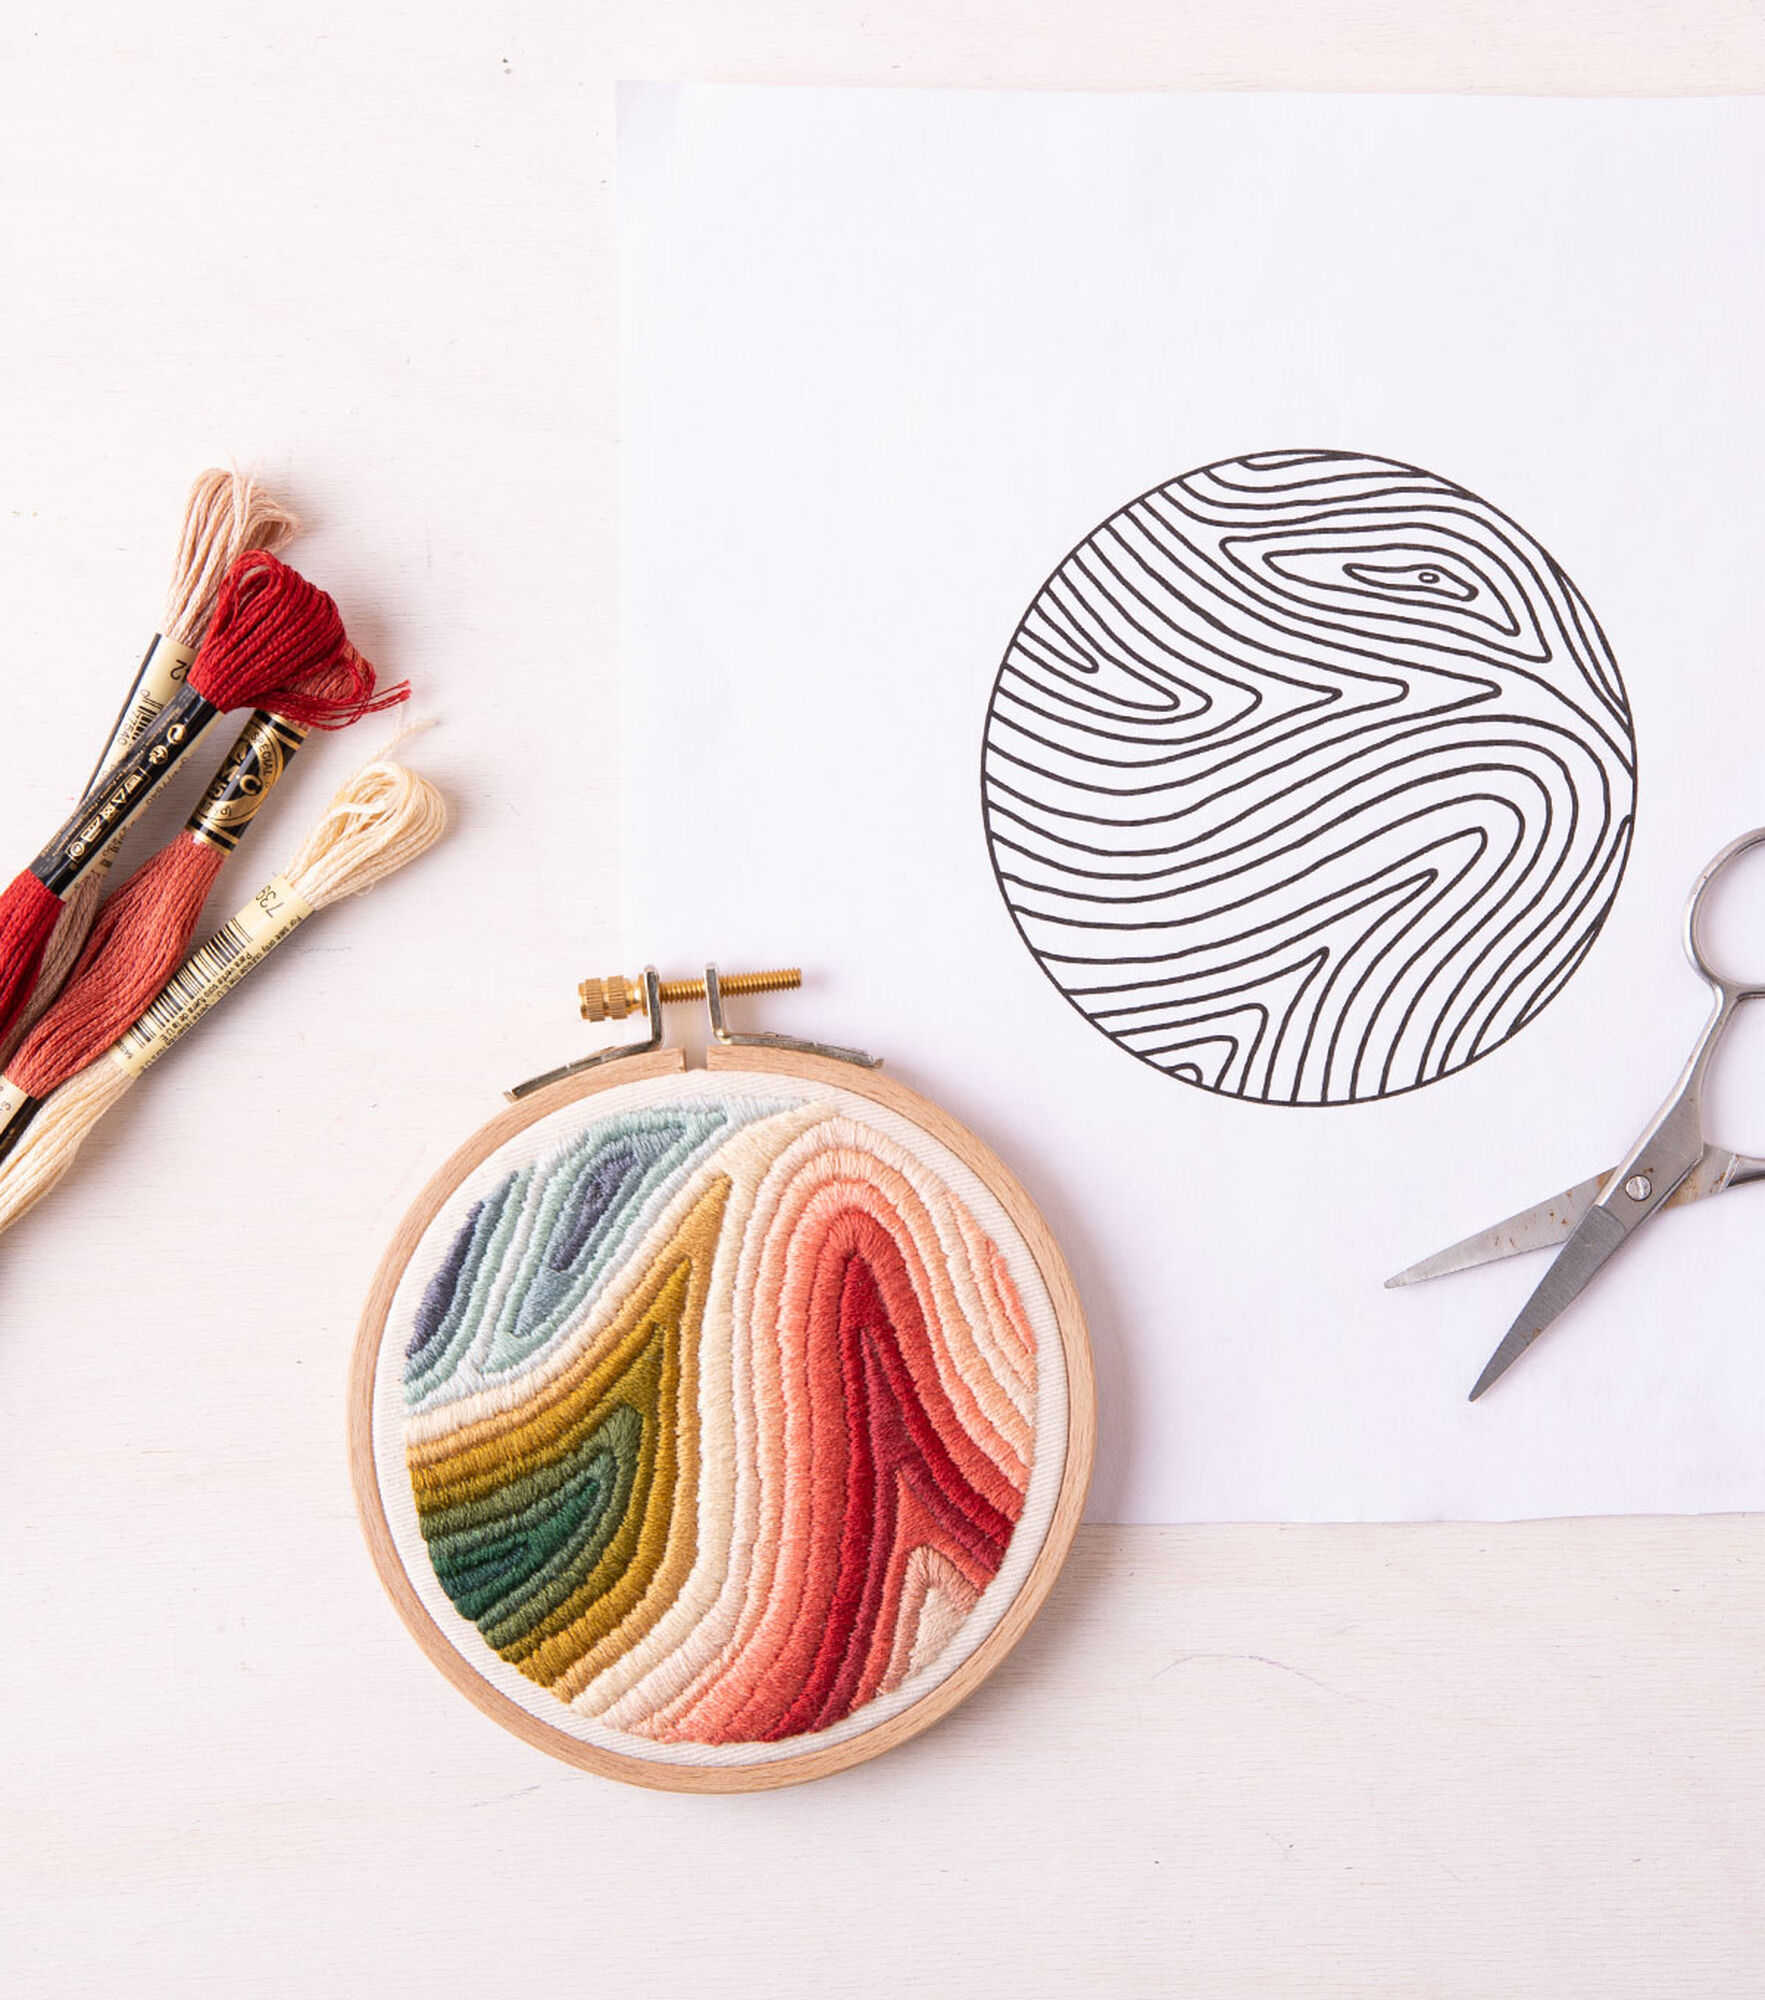 Marbled Embroidery Video Tutorial on Creativebug